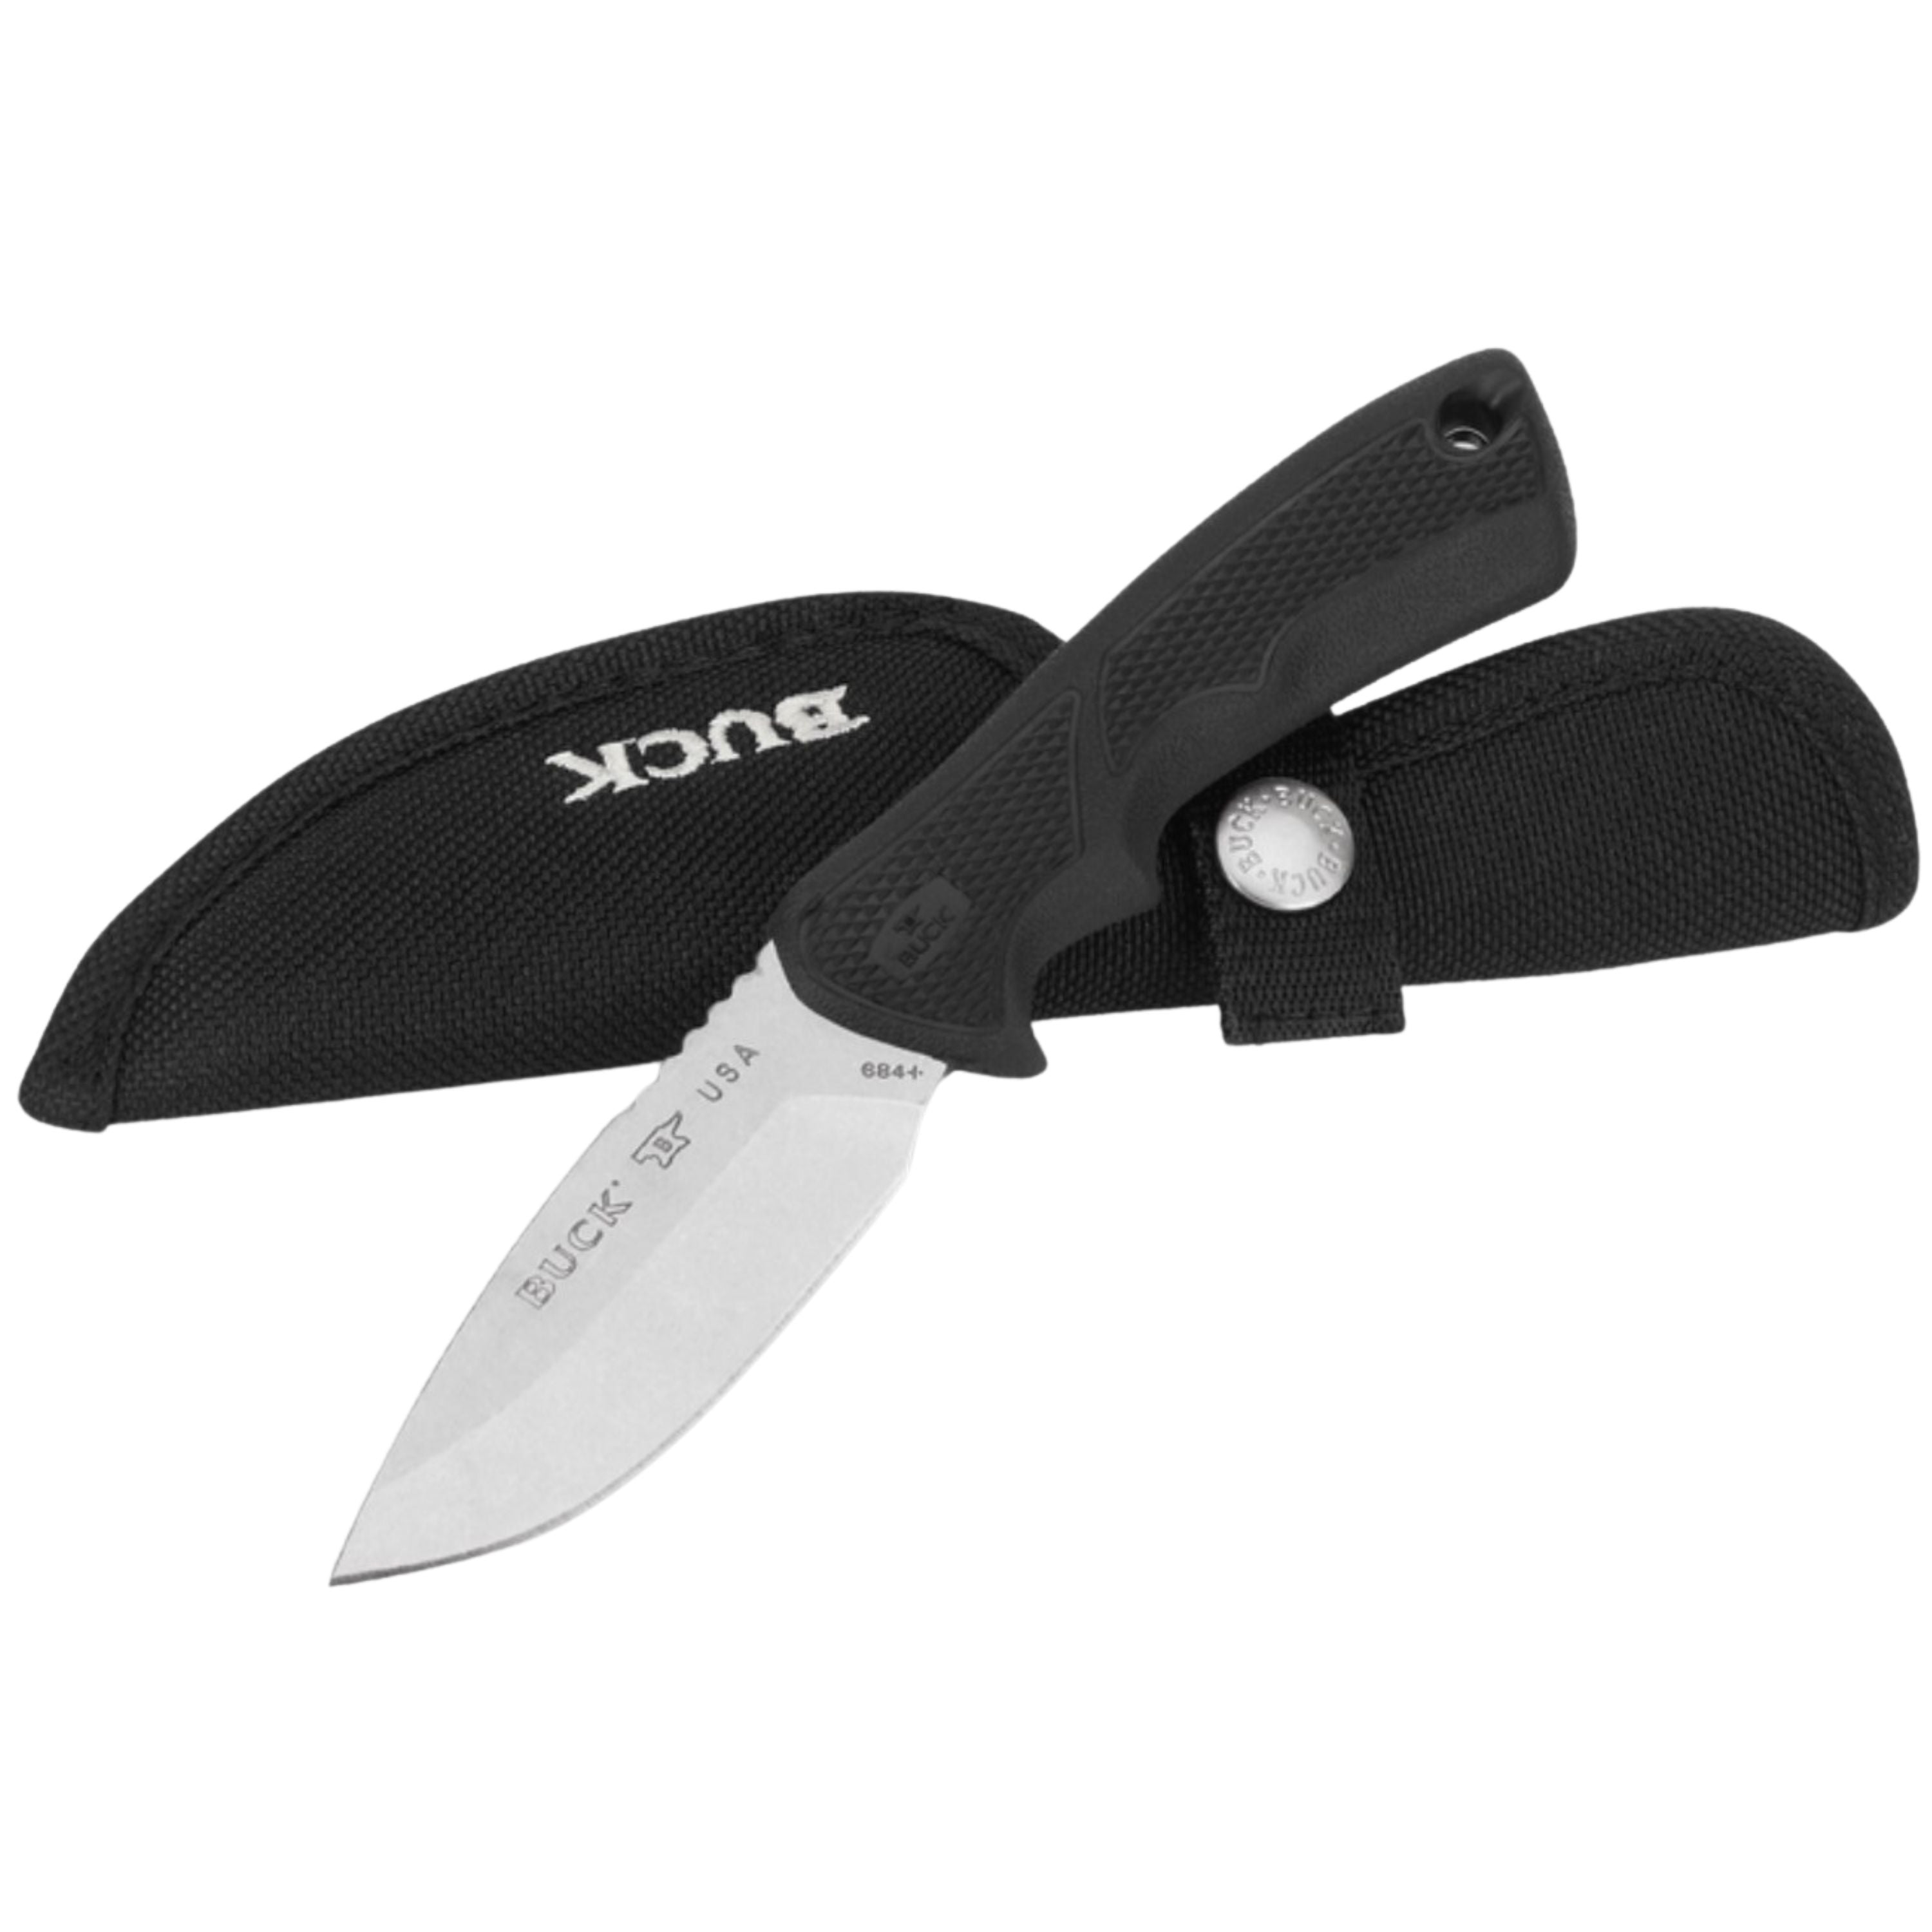 "Bucklite MAX II" small knife